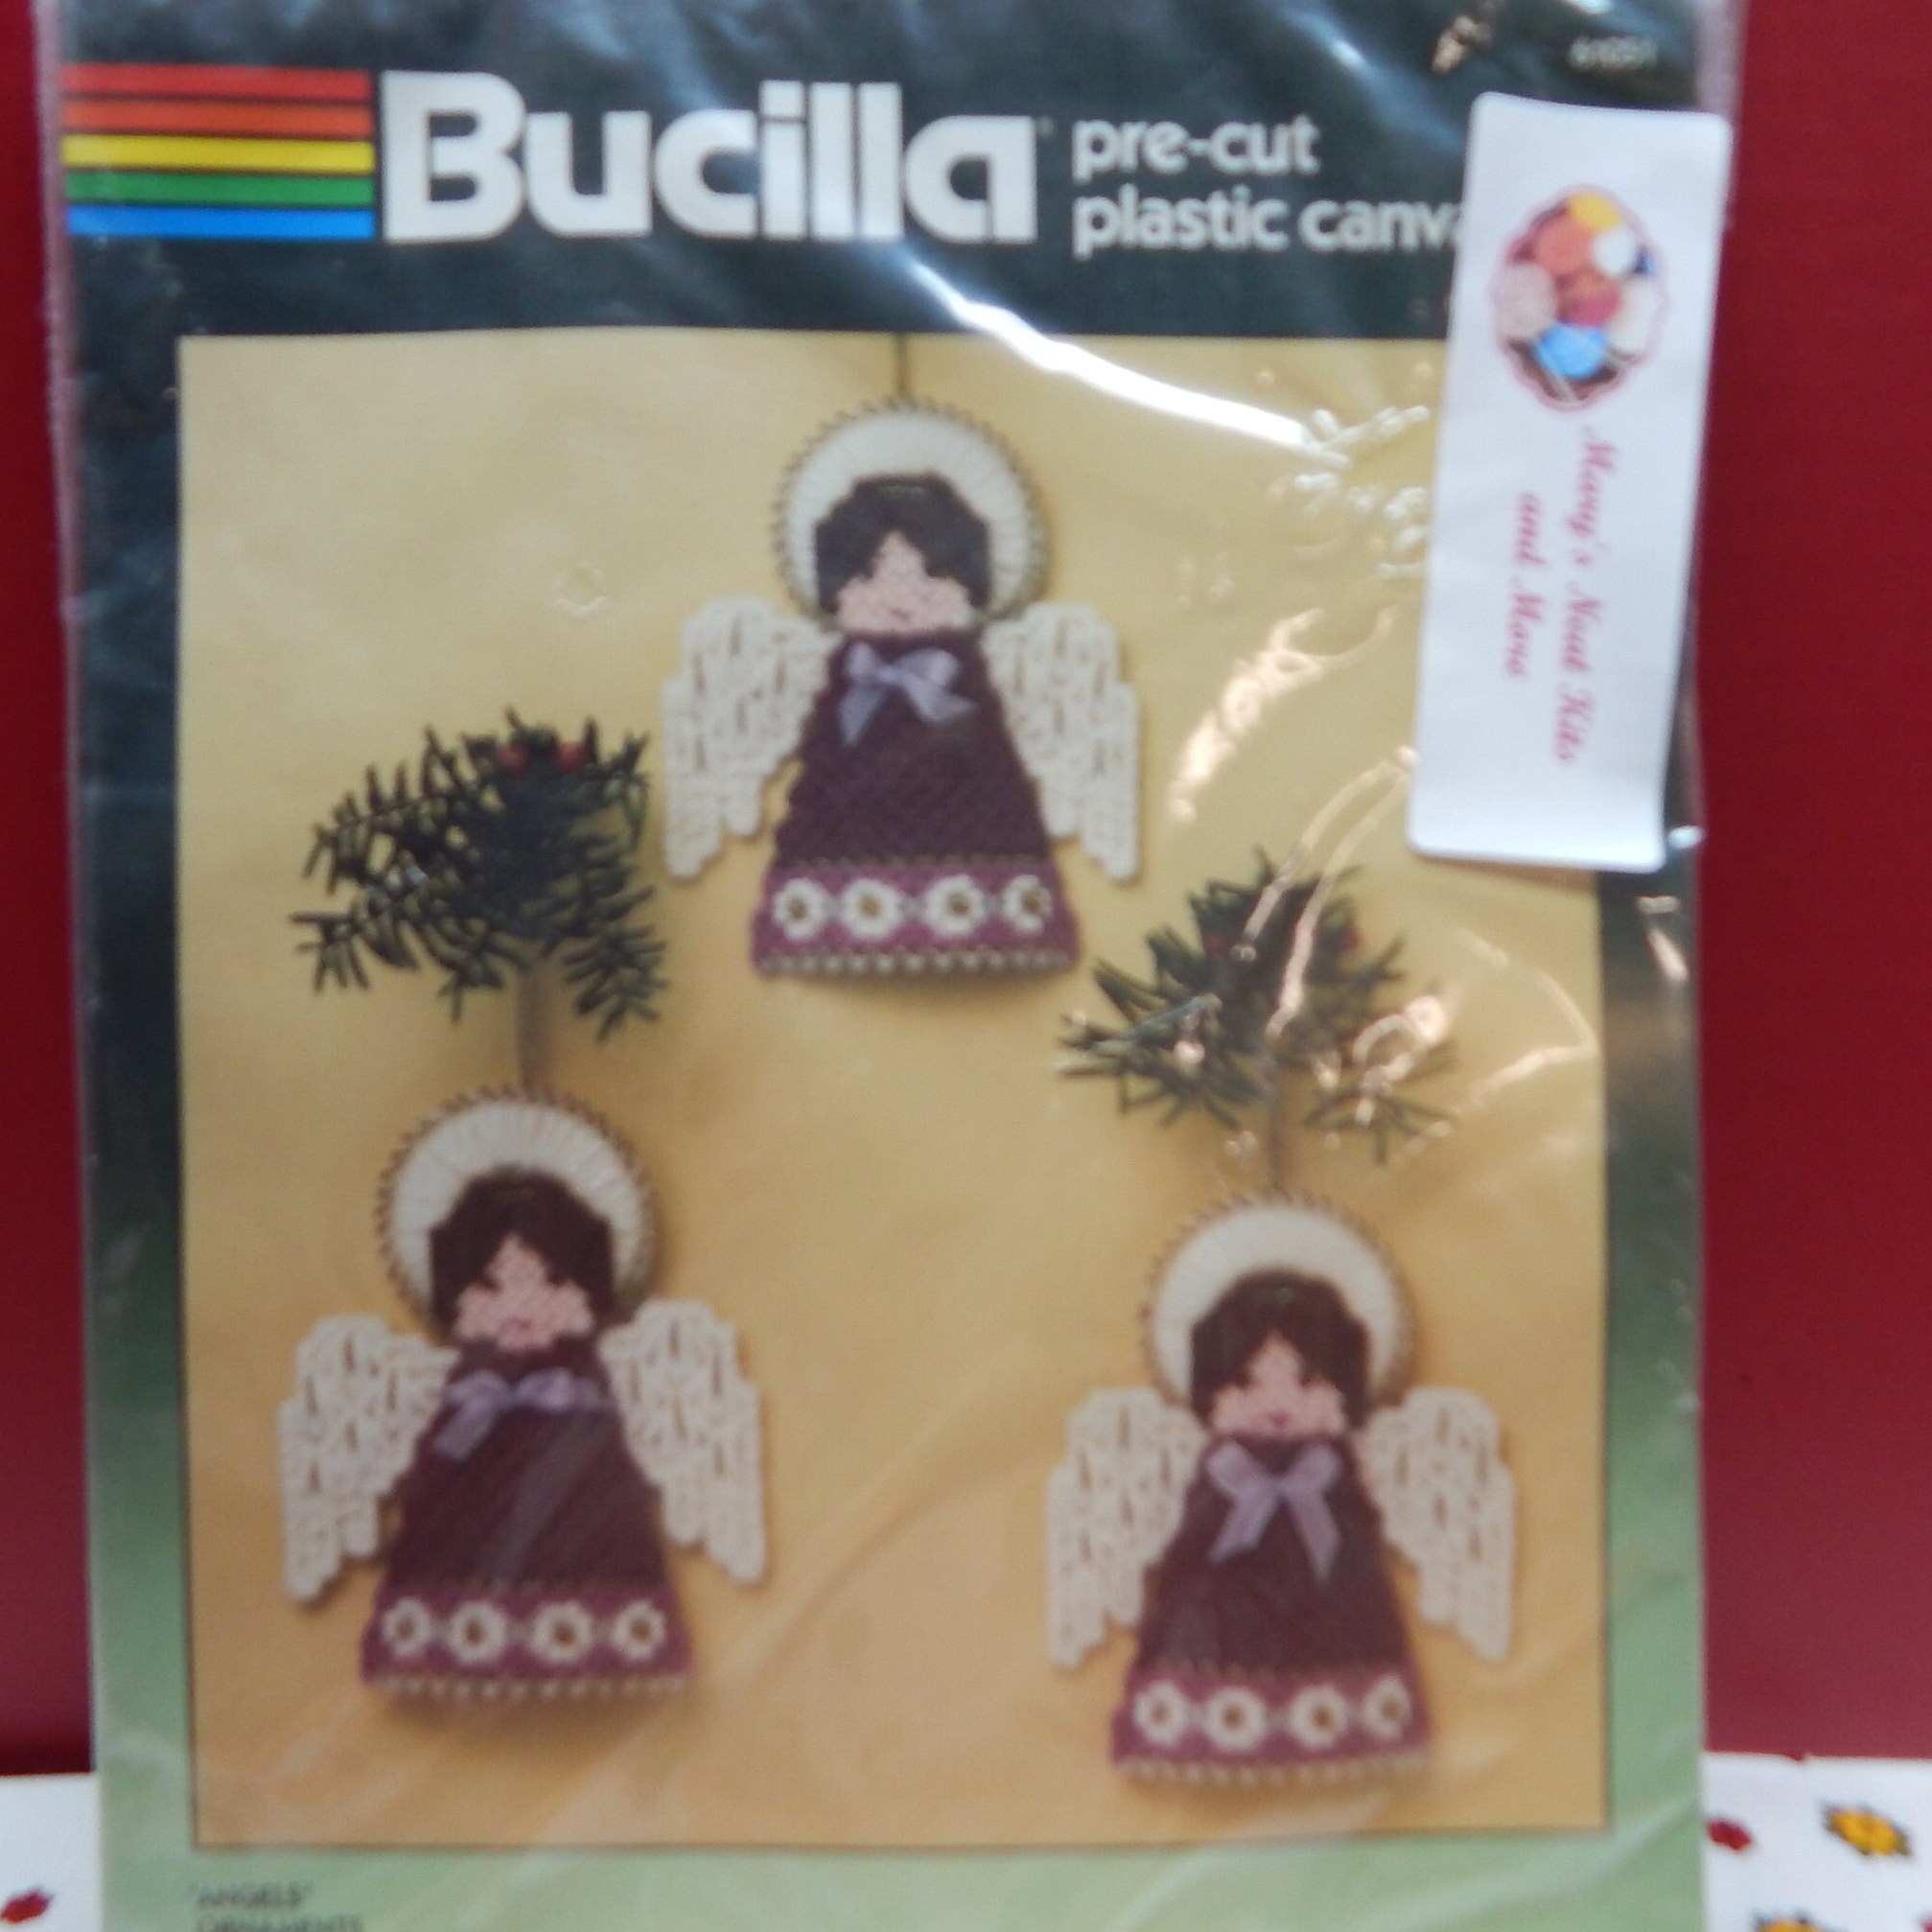 Bucilla Plastic Canvas Kit Sewing Machine Needles & Notions Holder Box 6184  New